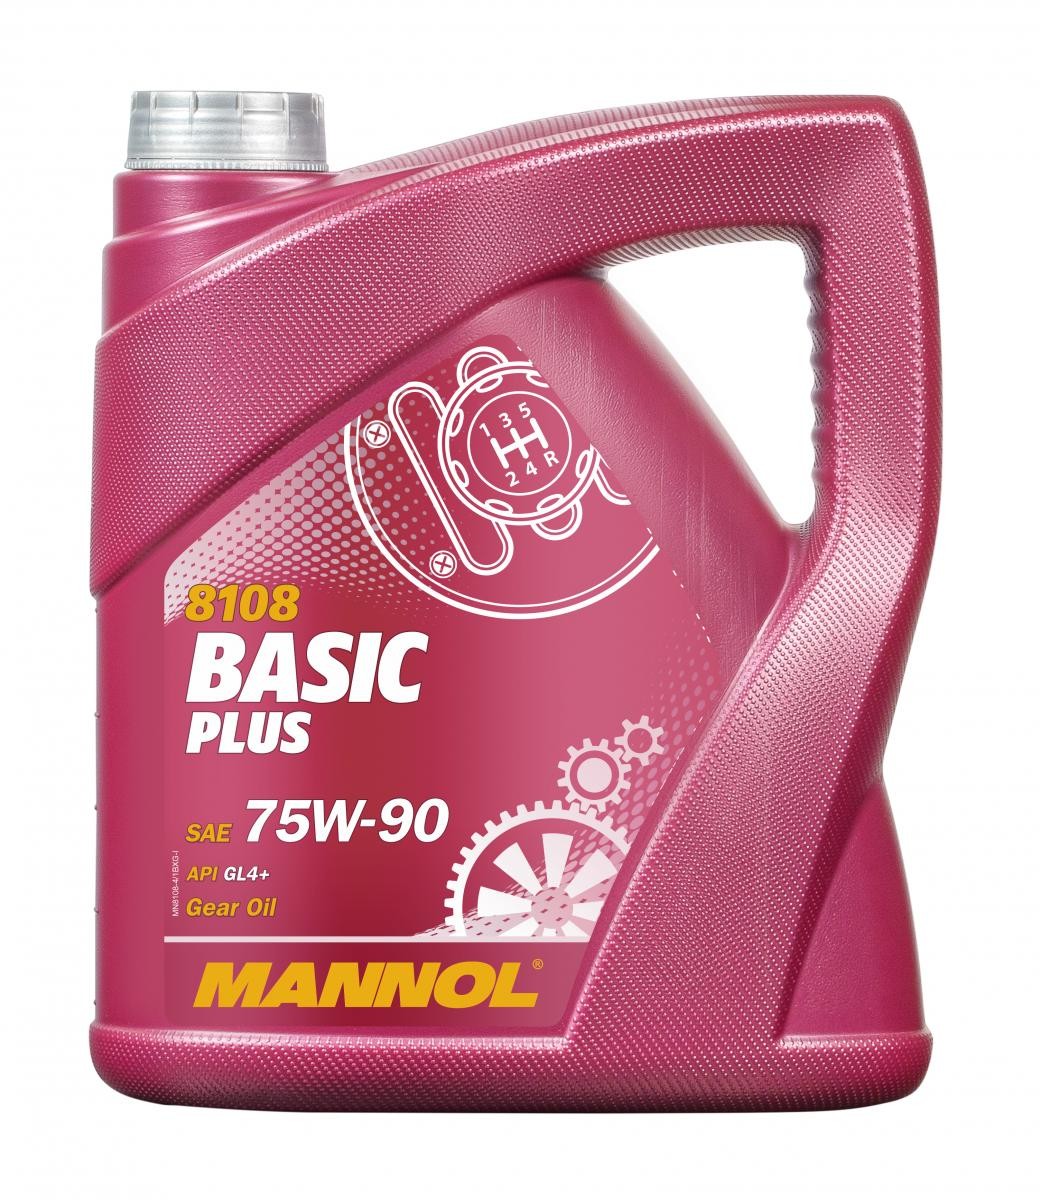 MANNOL BASIC PLUS MN8108-4 Transmission fluid 75W-90, Full Synthetic Oil, Capacity: 4l